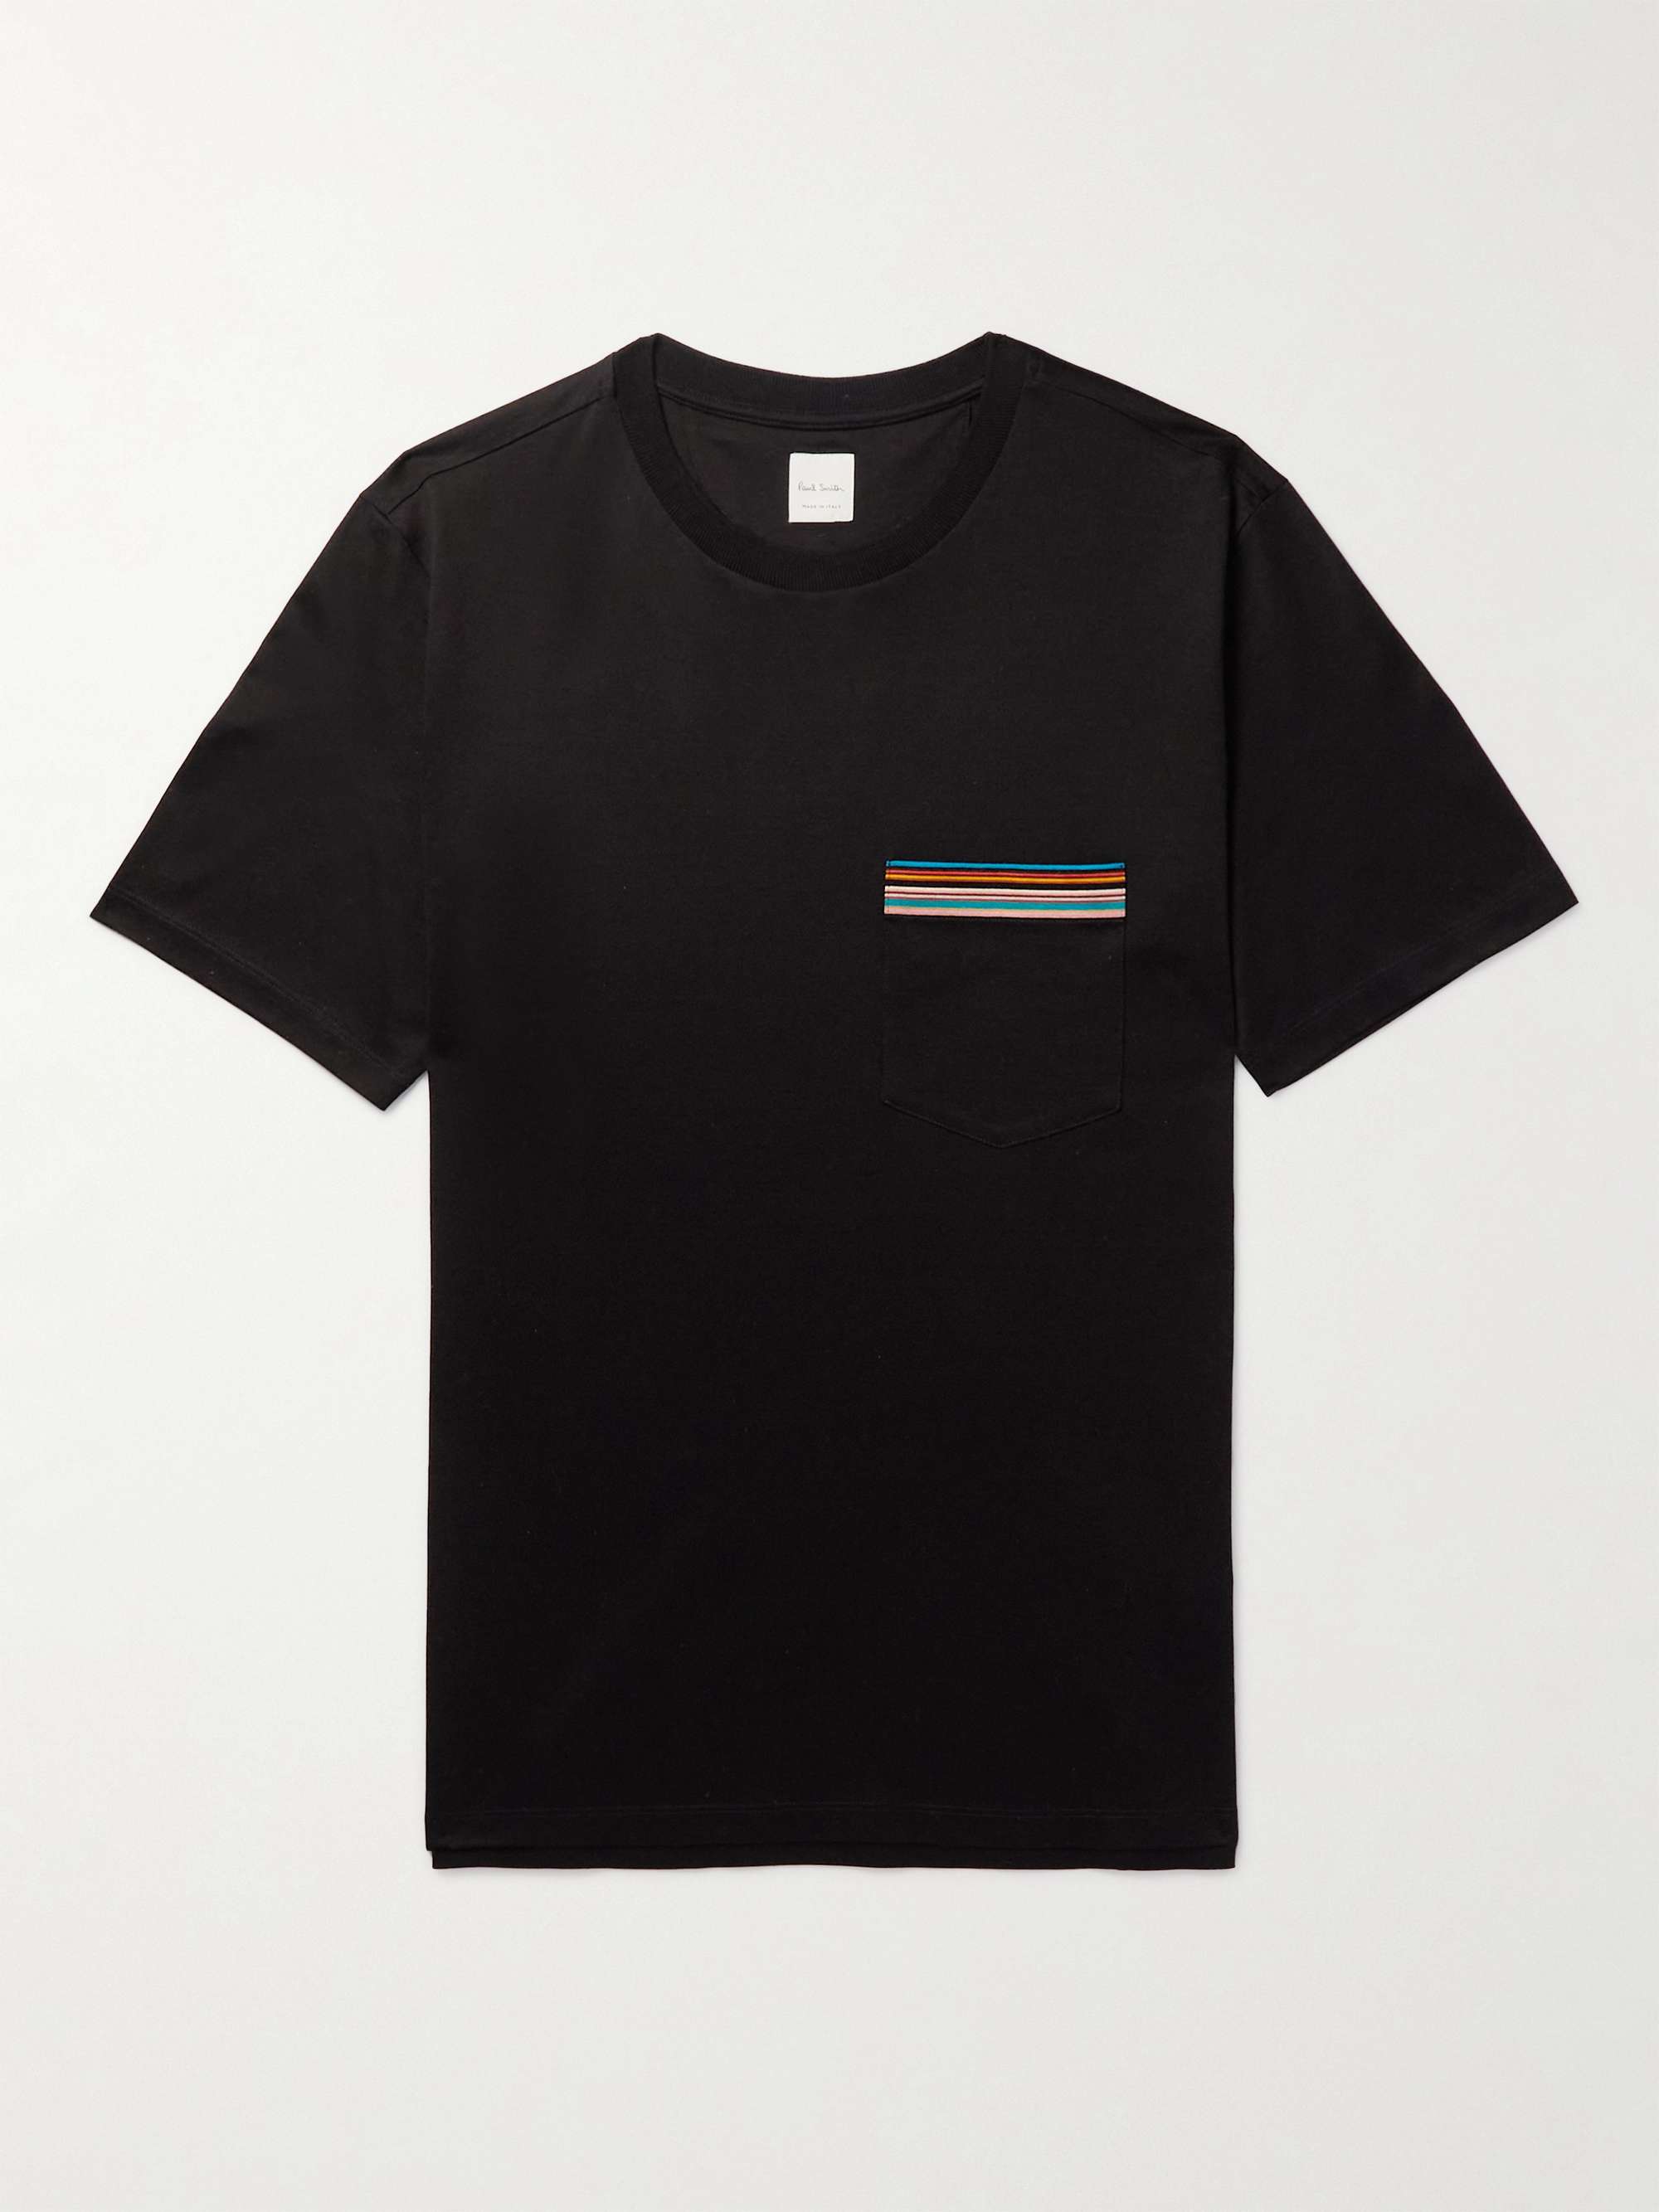 PAUL SMITH Striped Cotton-Jersey T-Shirt for Men | MR PORTER